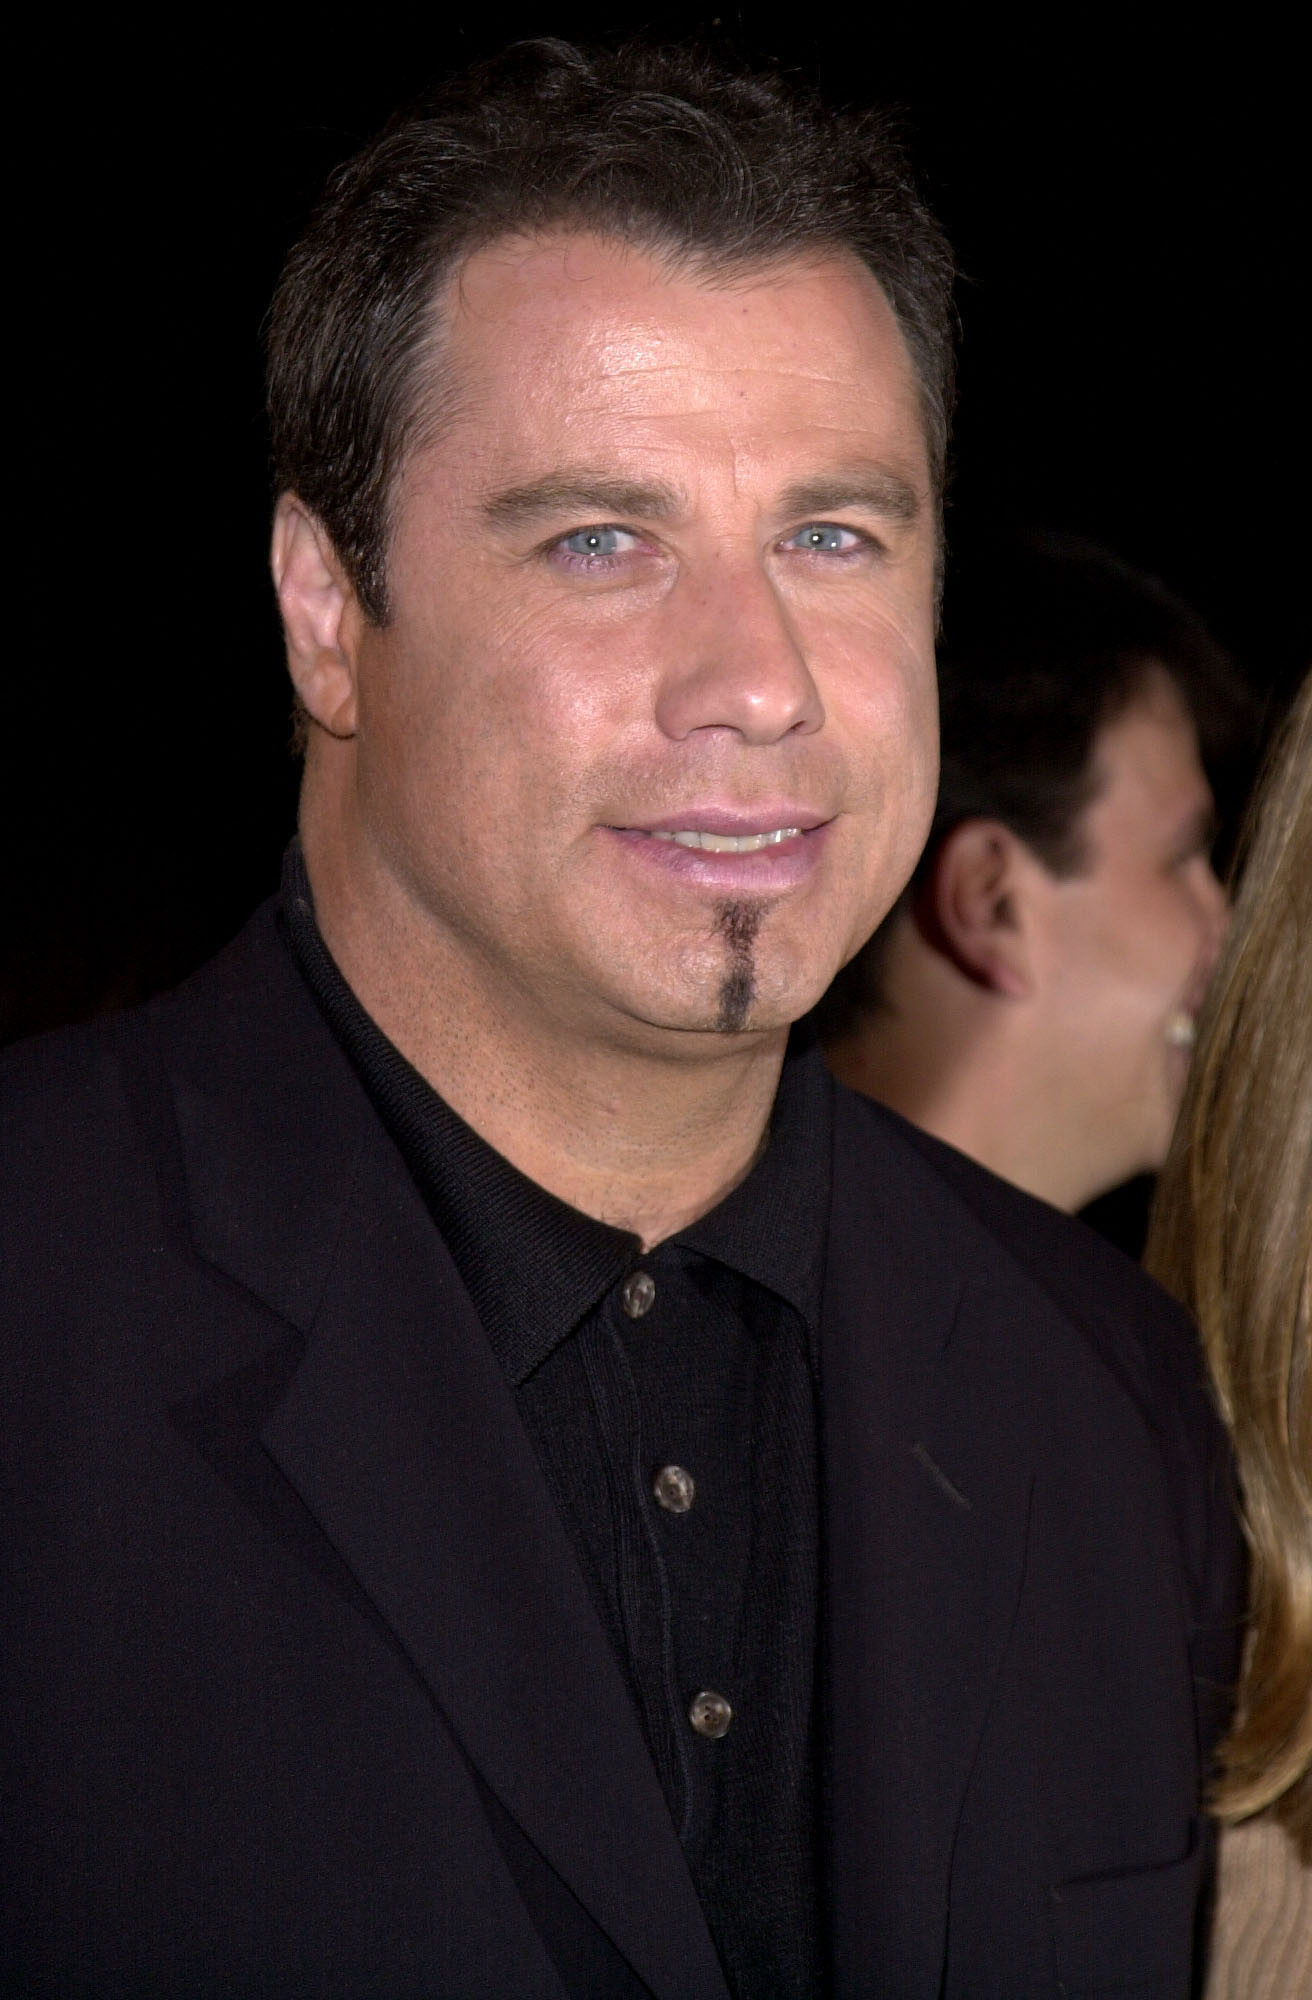 John Travolta wearing a classic black suit, attending a celebrity event